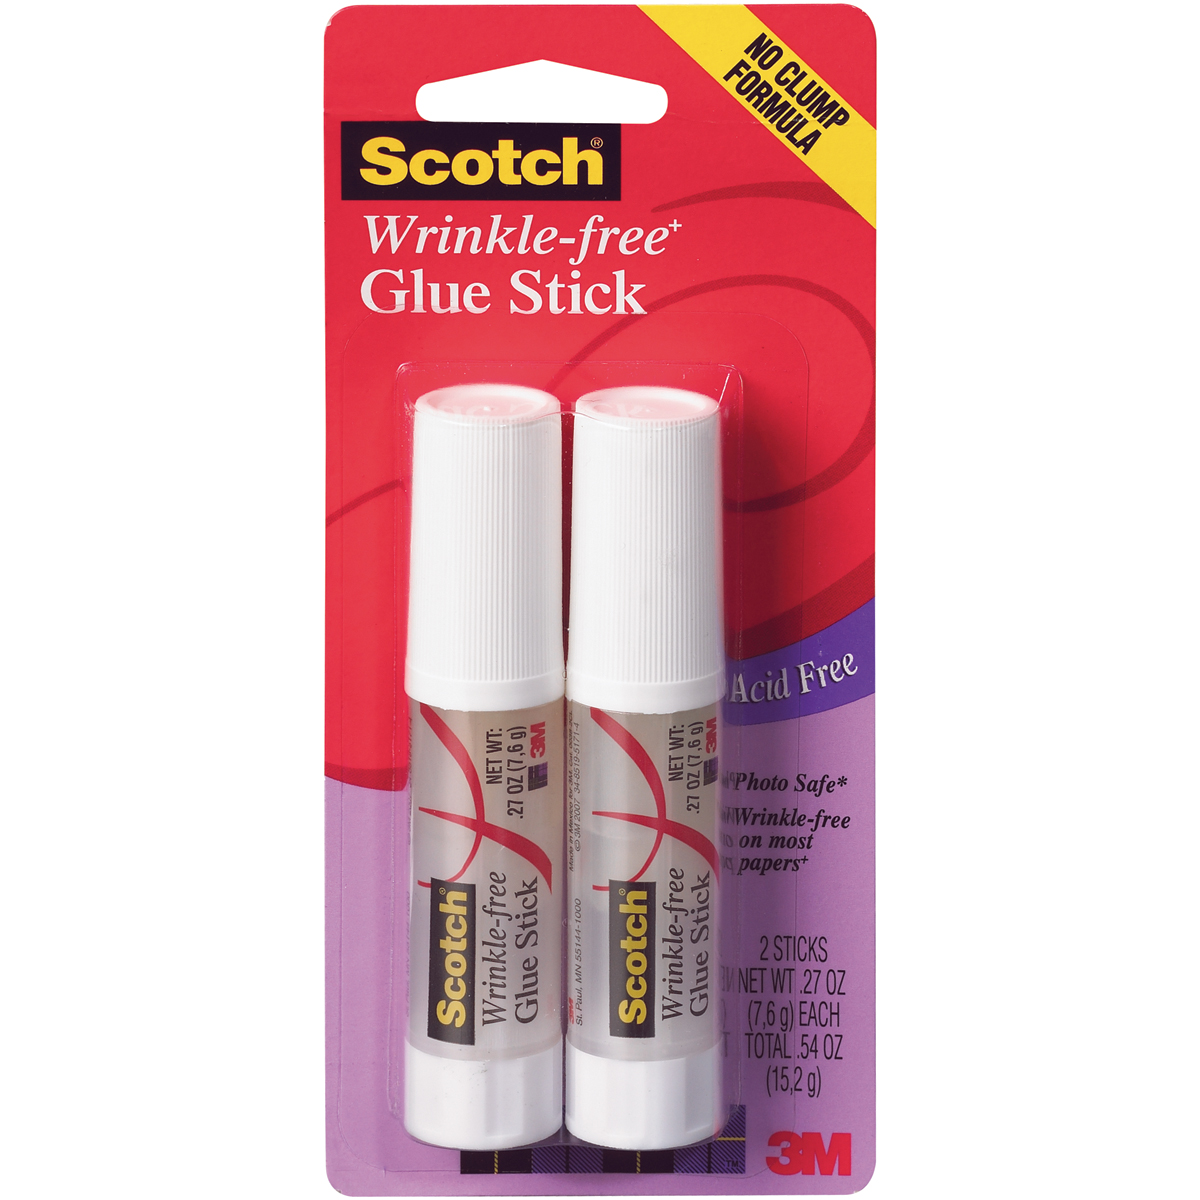 Scotch Wrinkle-free Glue Stick, .27 oz, Clear, 2/Pack (00382CL) | eBay